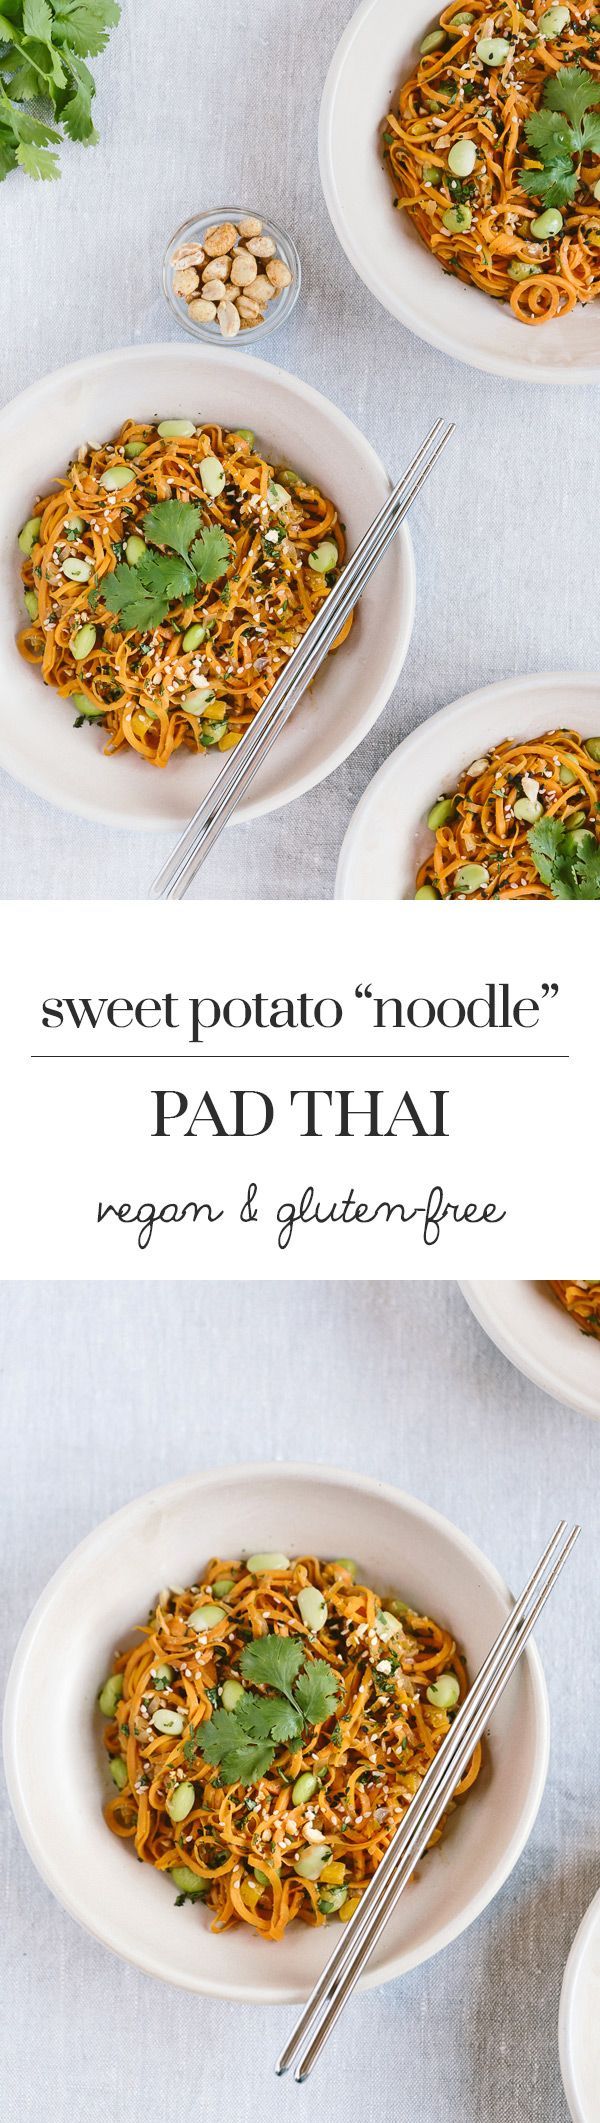 Sweet Potato Noodle Pad Thai: A vegan and gluten-free pad thai recipe made with sweet potato “noodles”.